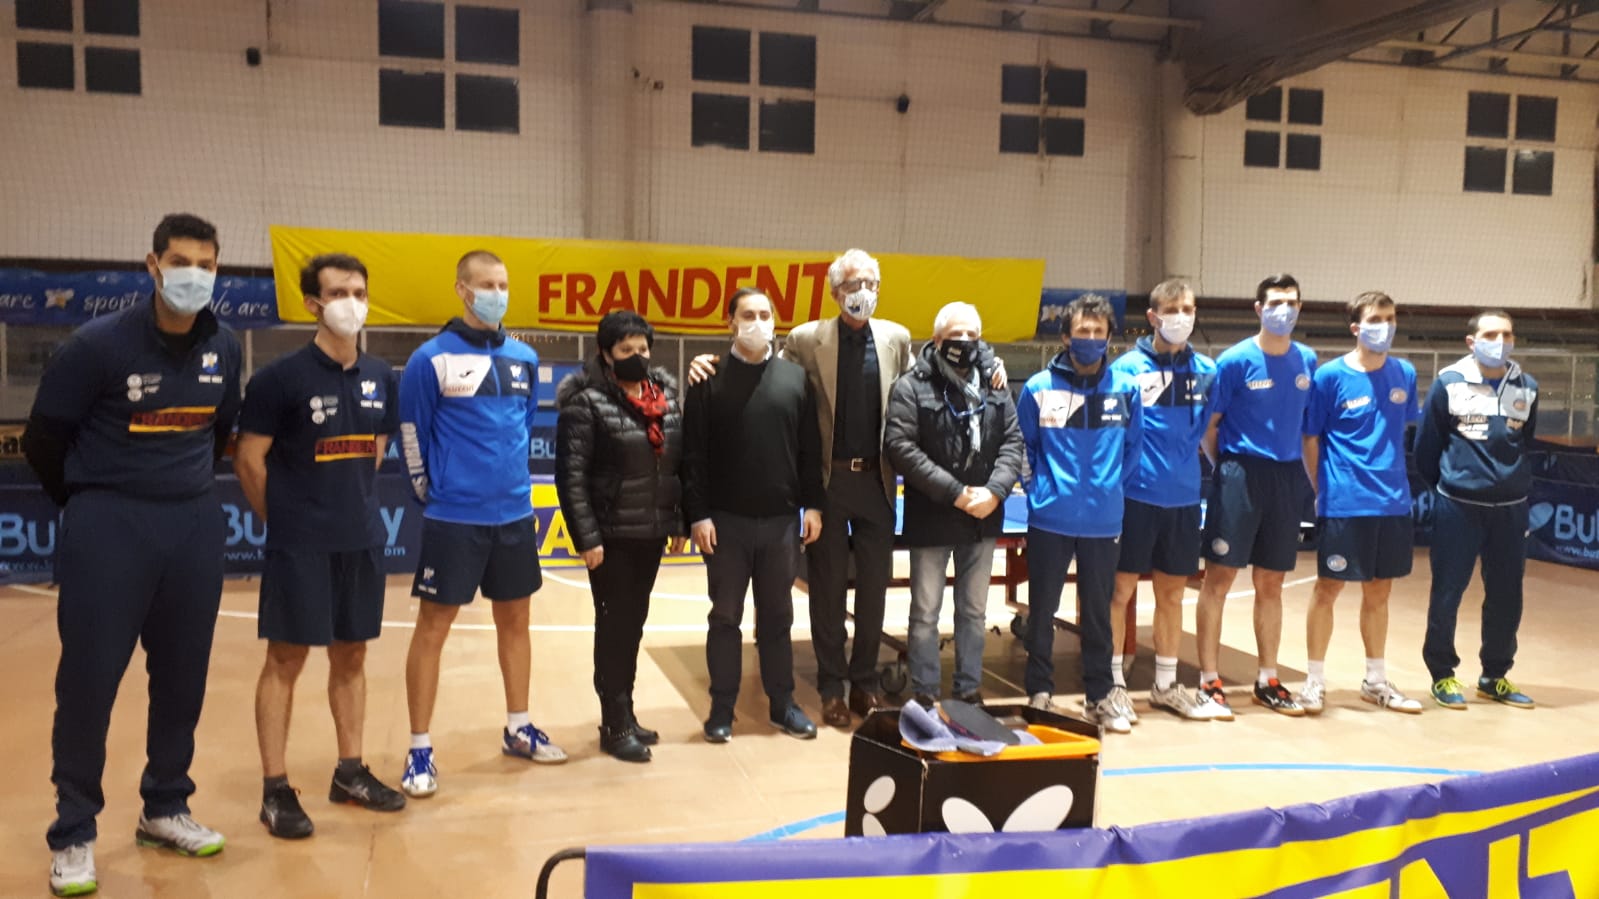 Frandent Group Cus Torino contro Tennistavolo Reggio Emilia Ferval 2020 2021